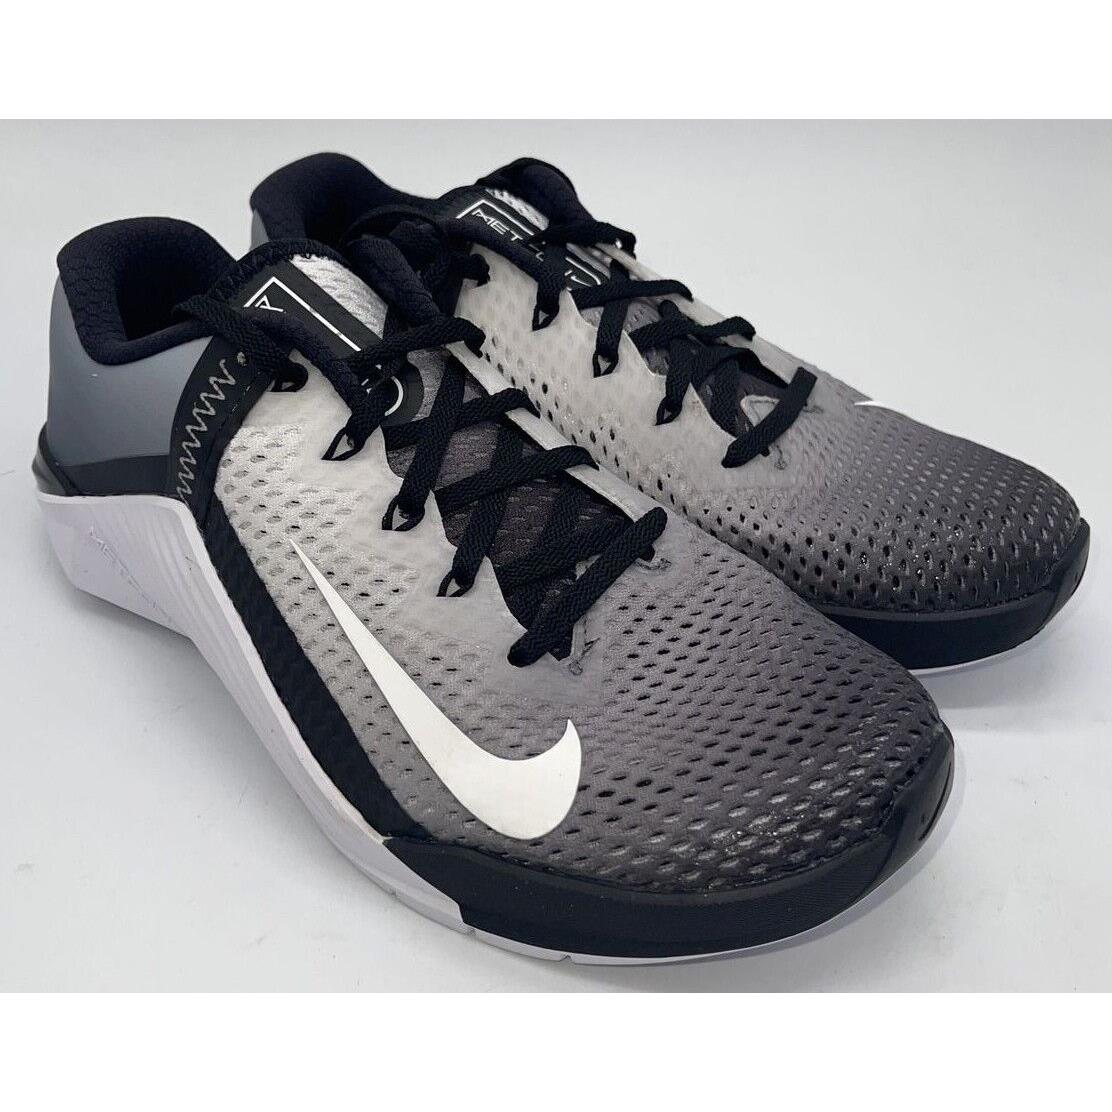 Amoroso Islas del pacifico búnker Nike Metcon 6 Gradient Trainer Shoes Black White DJ3073-001 Womens Sz 5.5 |  883212584670 - Nike shoes Metcon - Black | SporTipTop